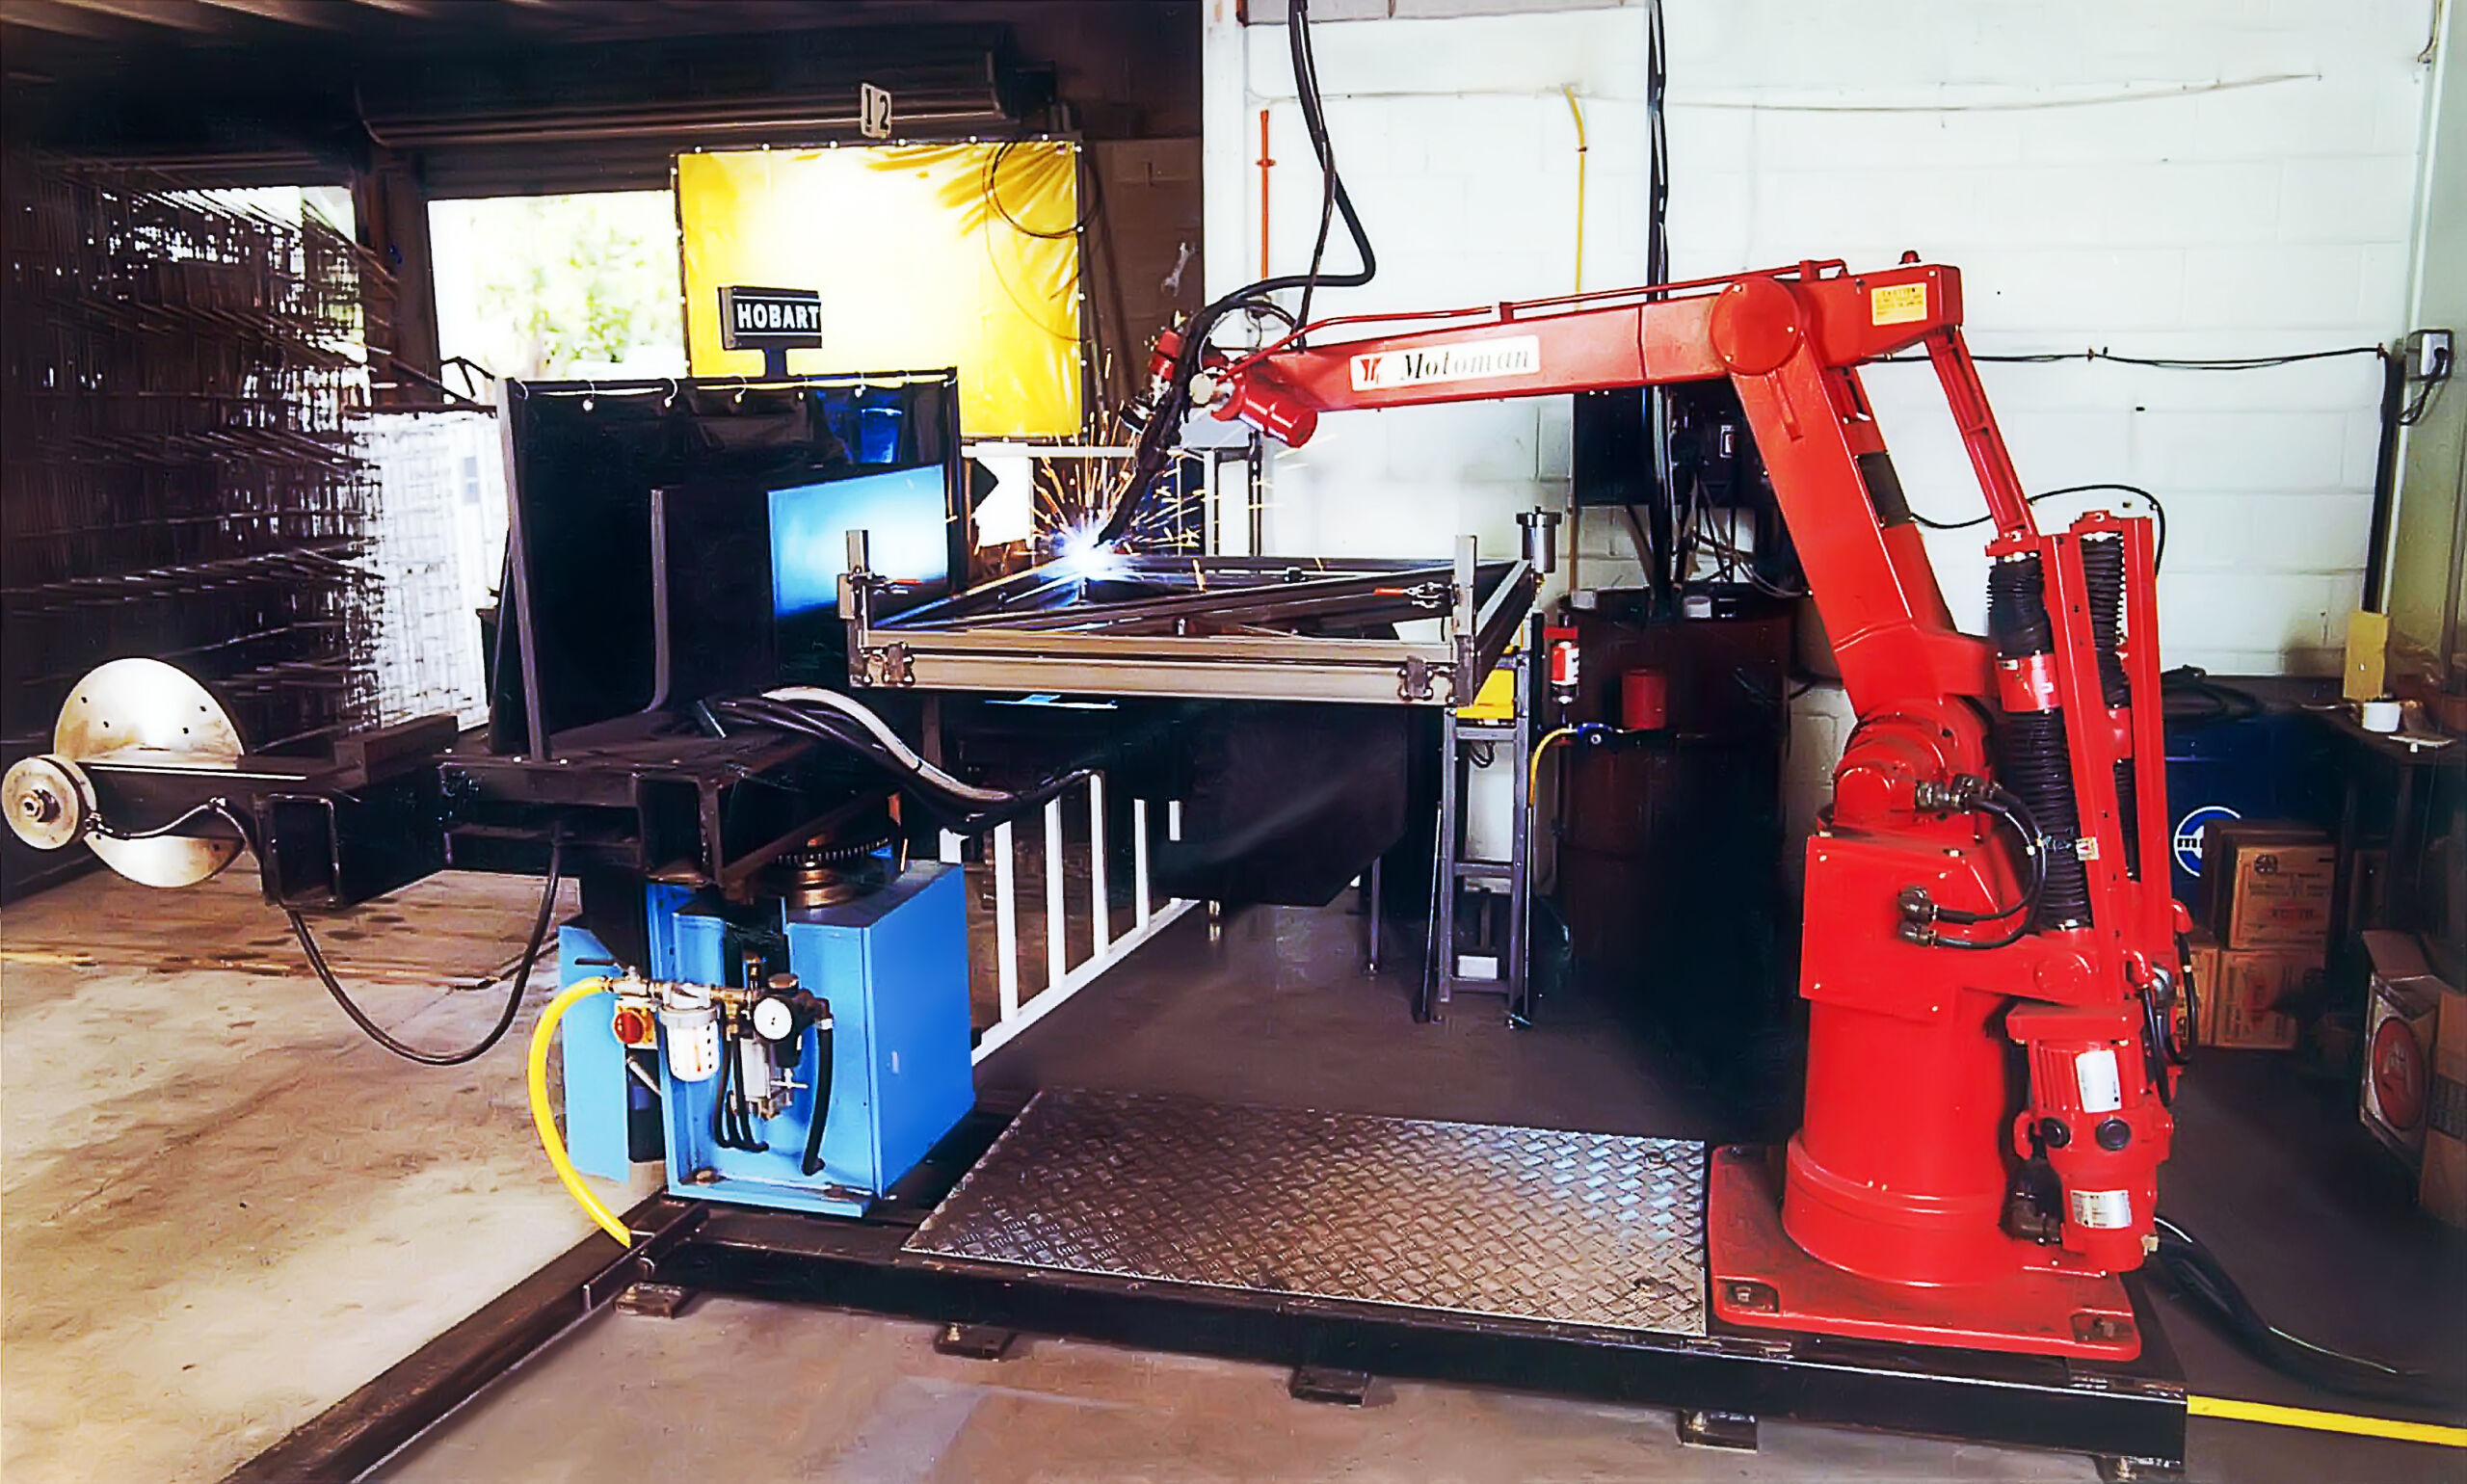 New Zealand's First MIG Welding Robot System